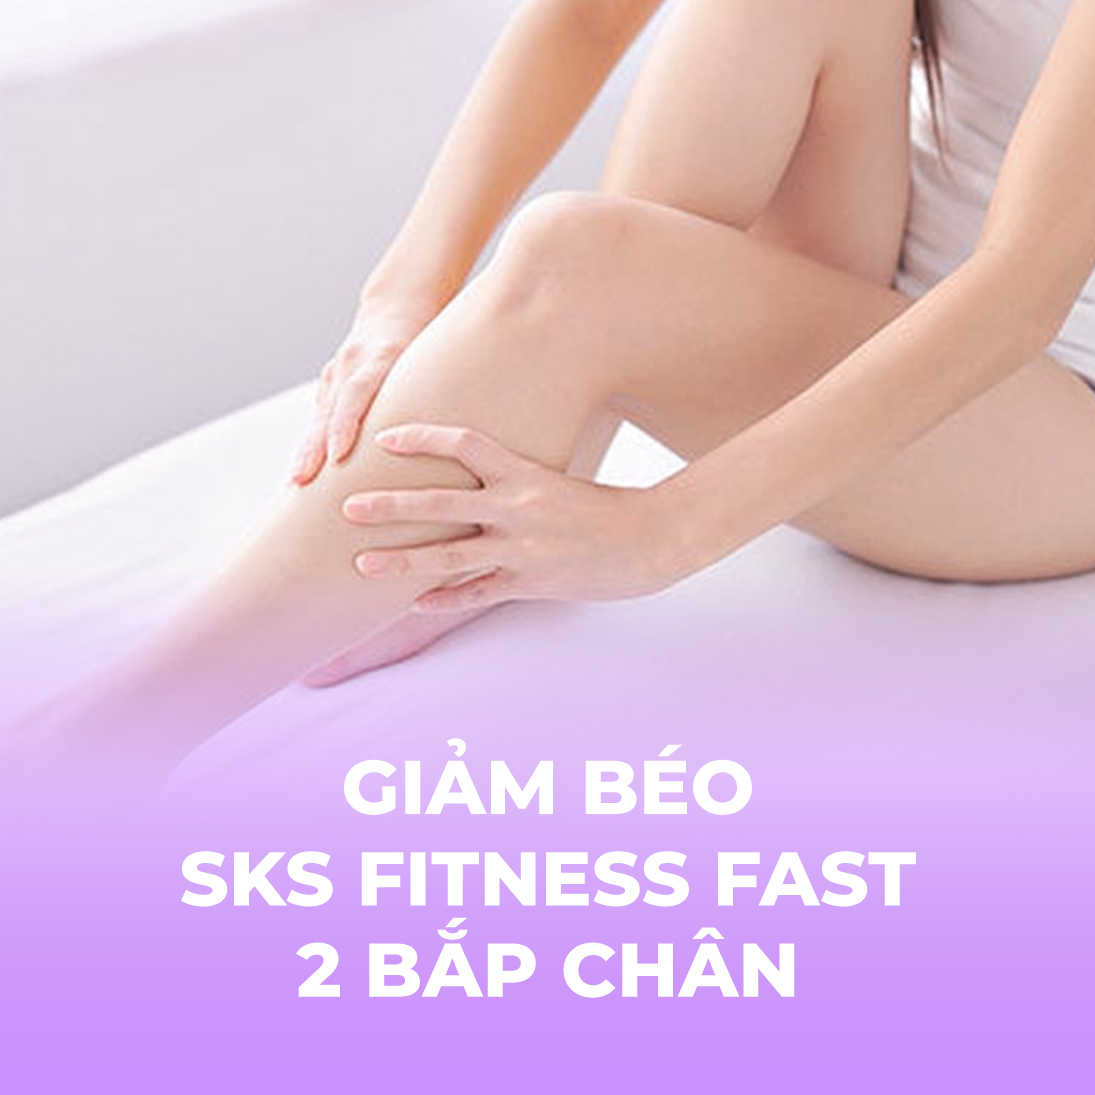 Giảm béo - SKS Fitness Fast - 2 bắp chân - 1 buổi